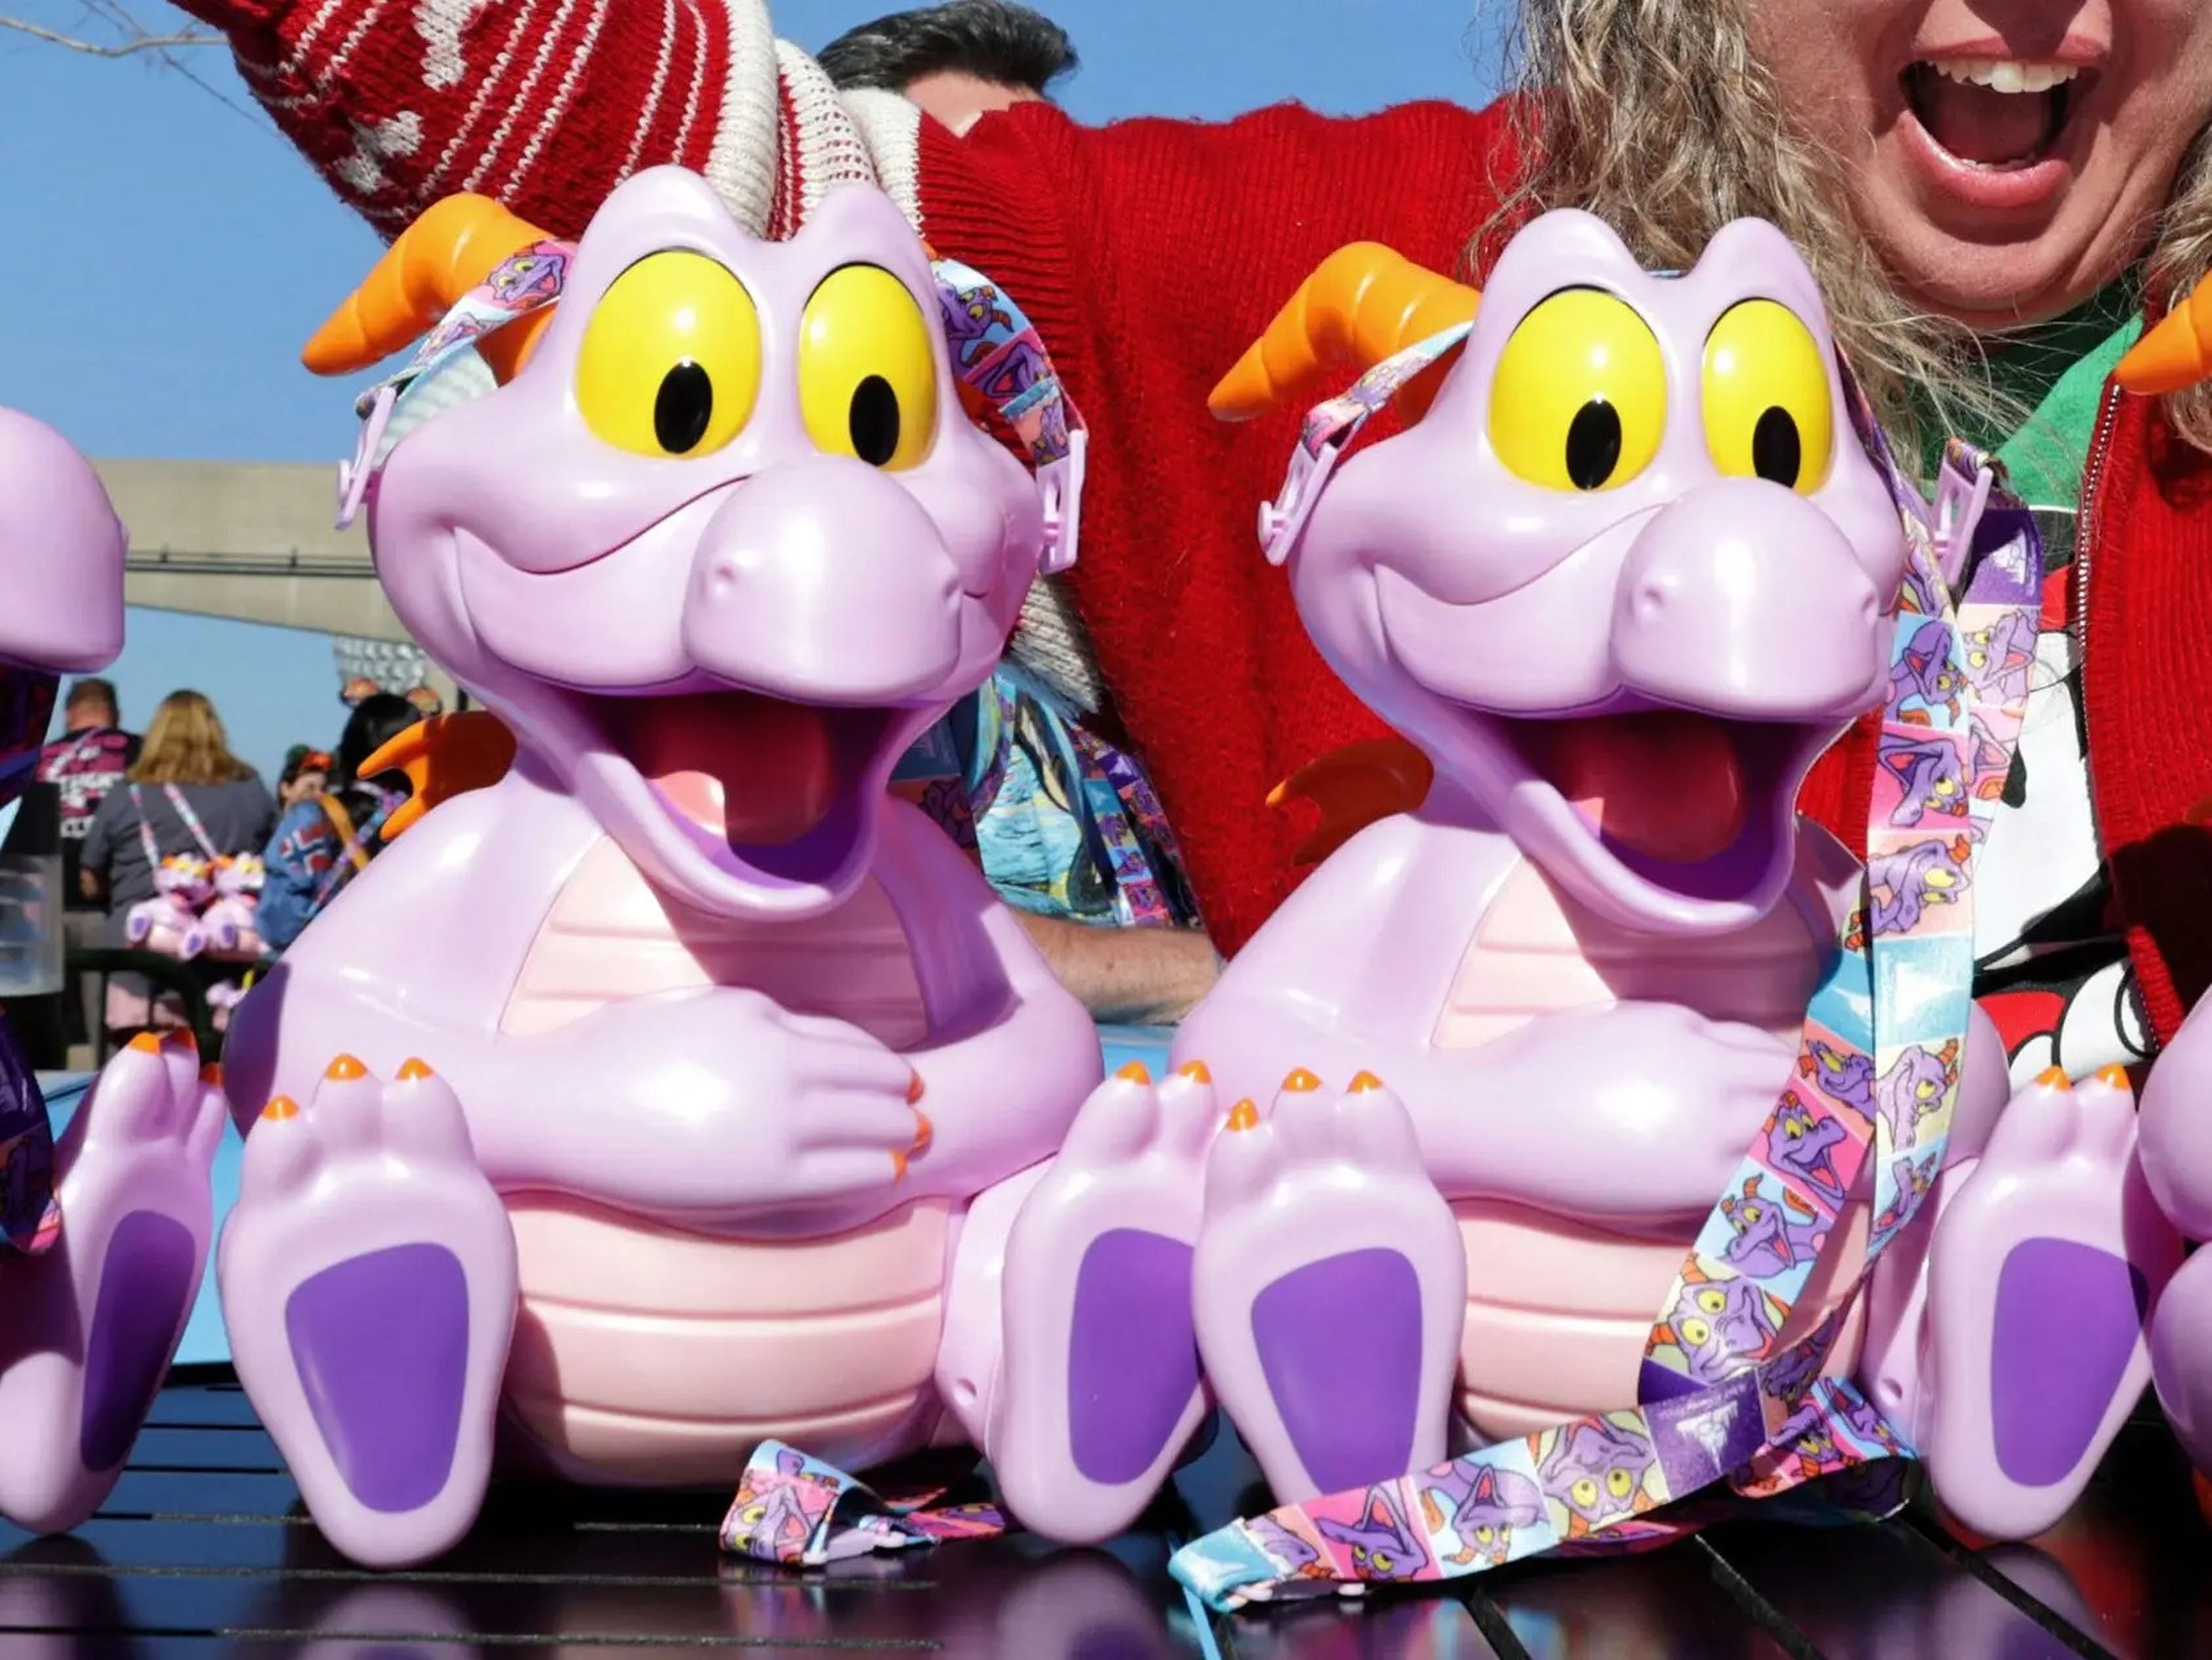 Purple smiling and sitting plastic dinosaur figures.